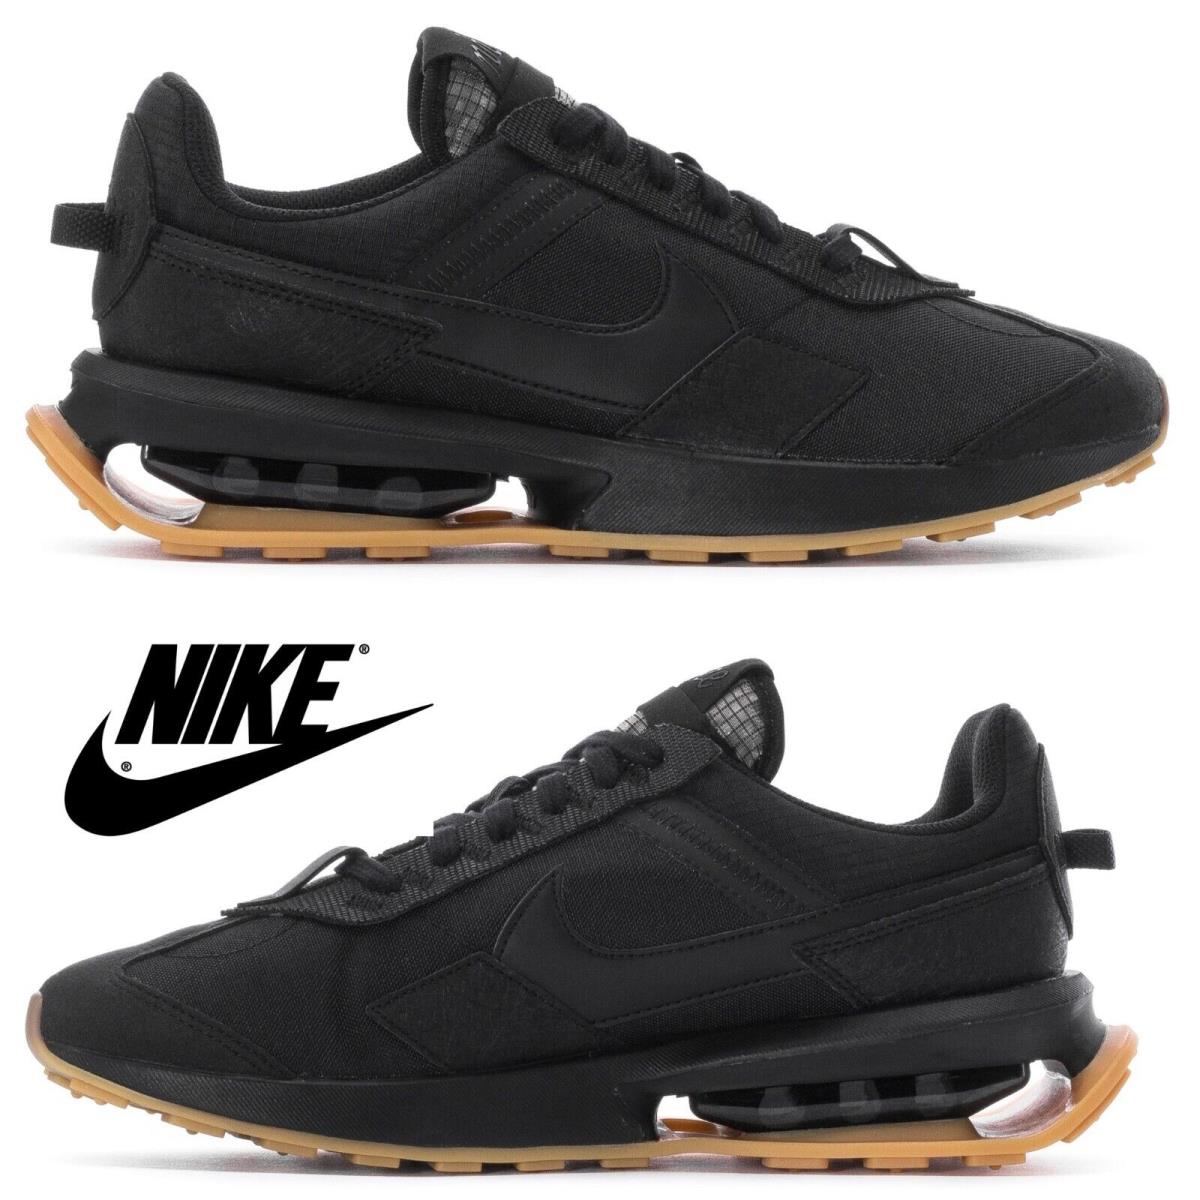 Nike Air Max Pre-day Men`s Sneakers Comfort Casual Sport Shoes Black Gum